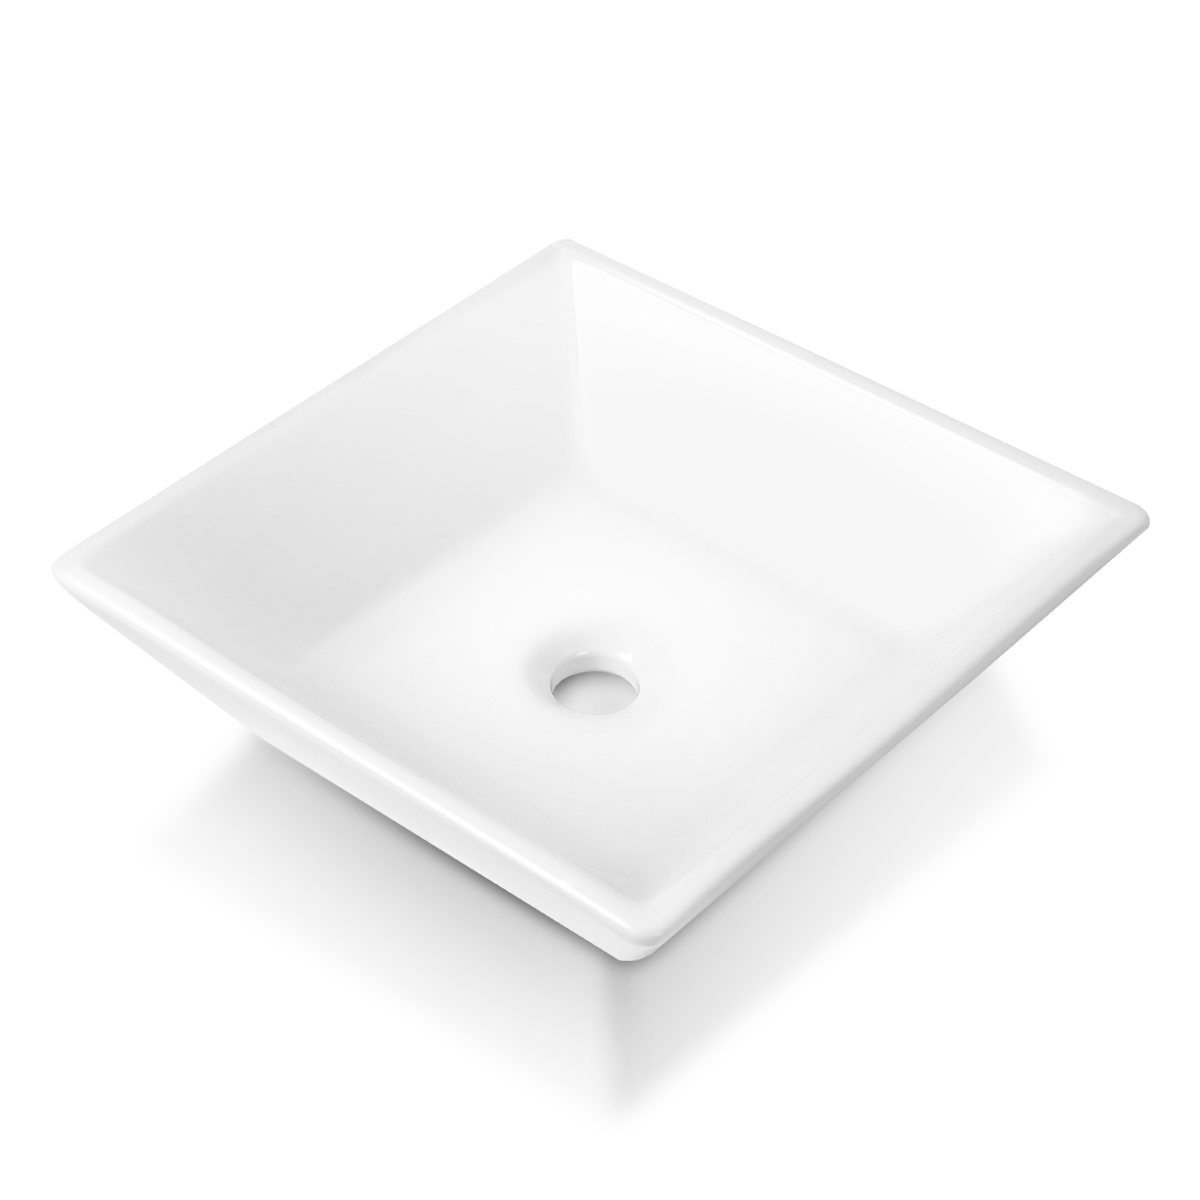 BVS1616A-OL 16" x 16" White Square Ceramic Countertop Bathroom Vanity Vessel Sink